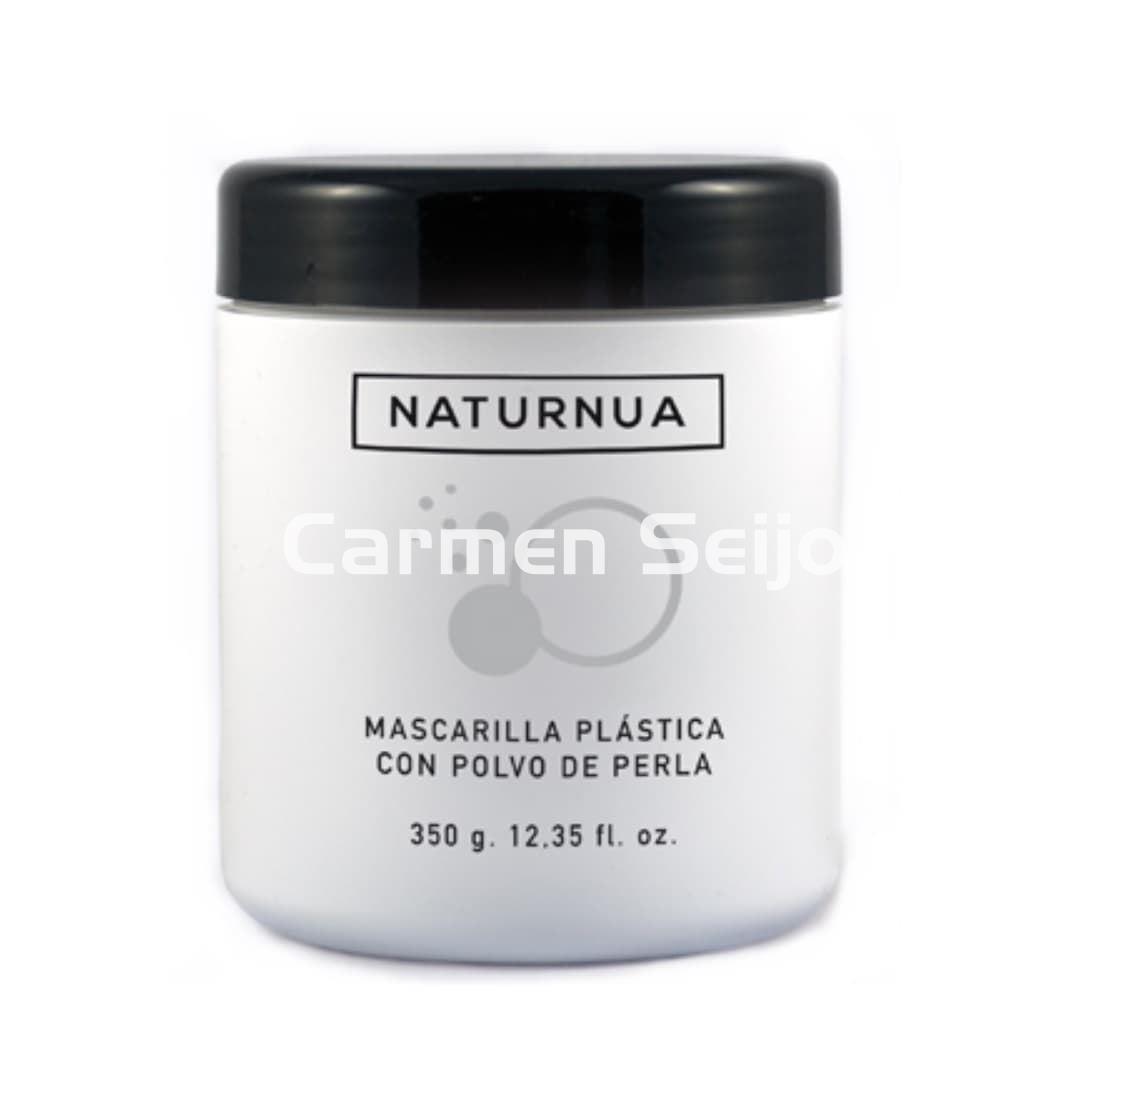 Naturnua Mascarilla Plástica con Polvo de Perla 350 gr. - Imagen 1